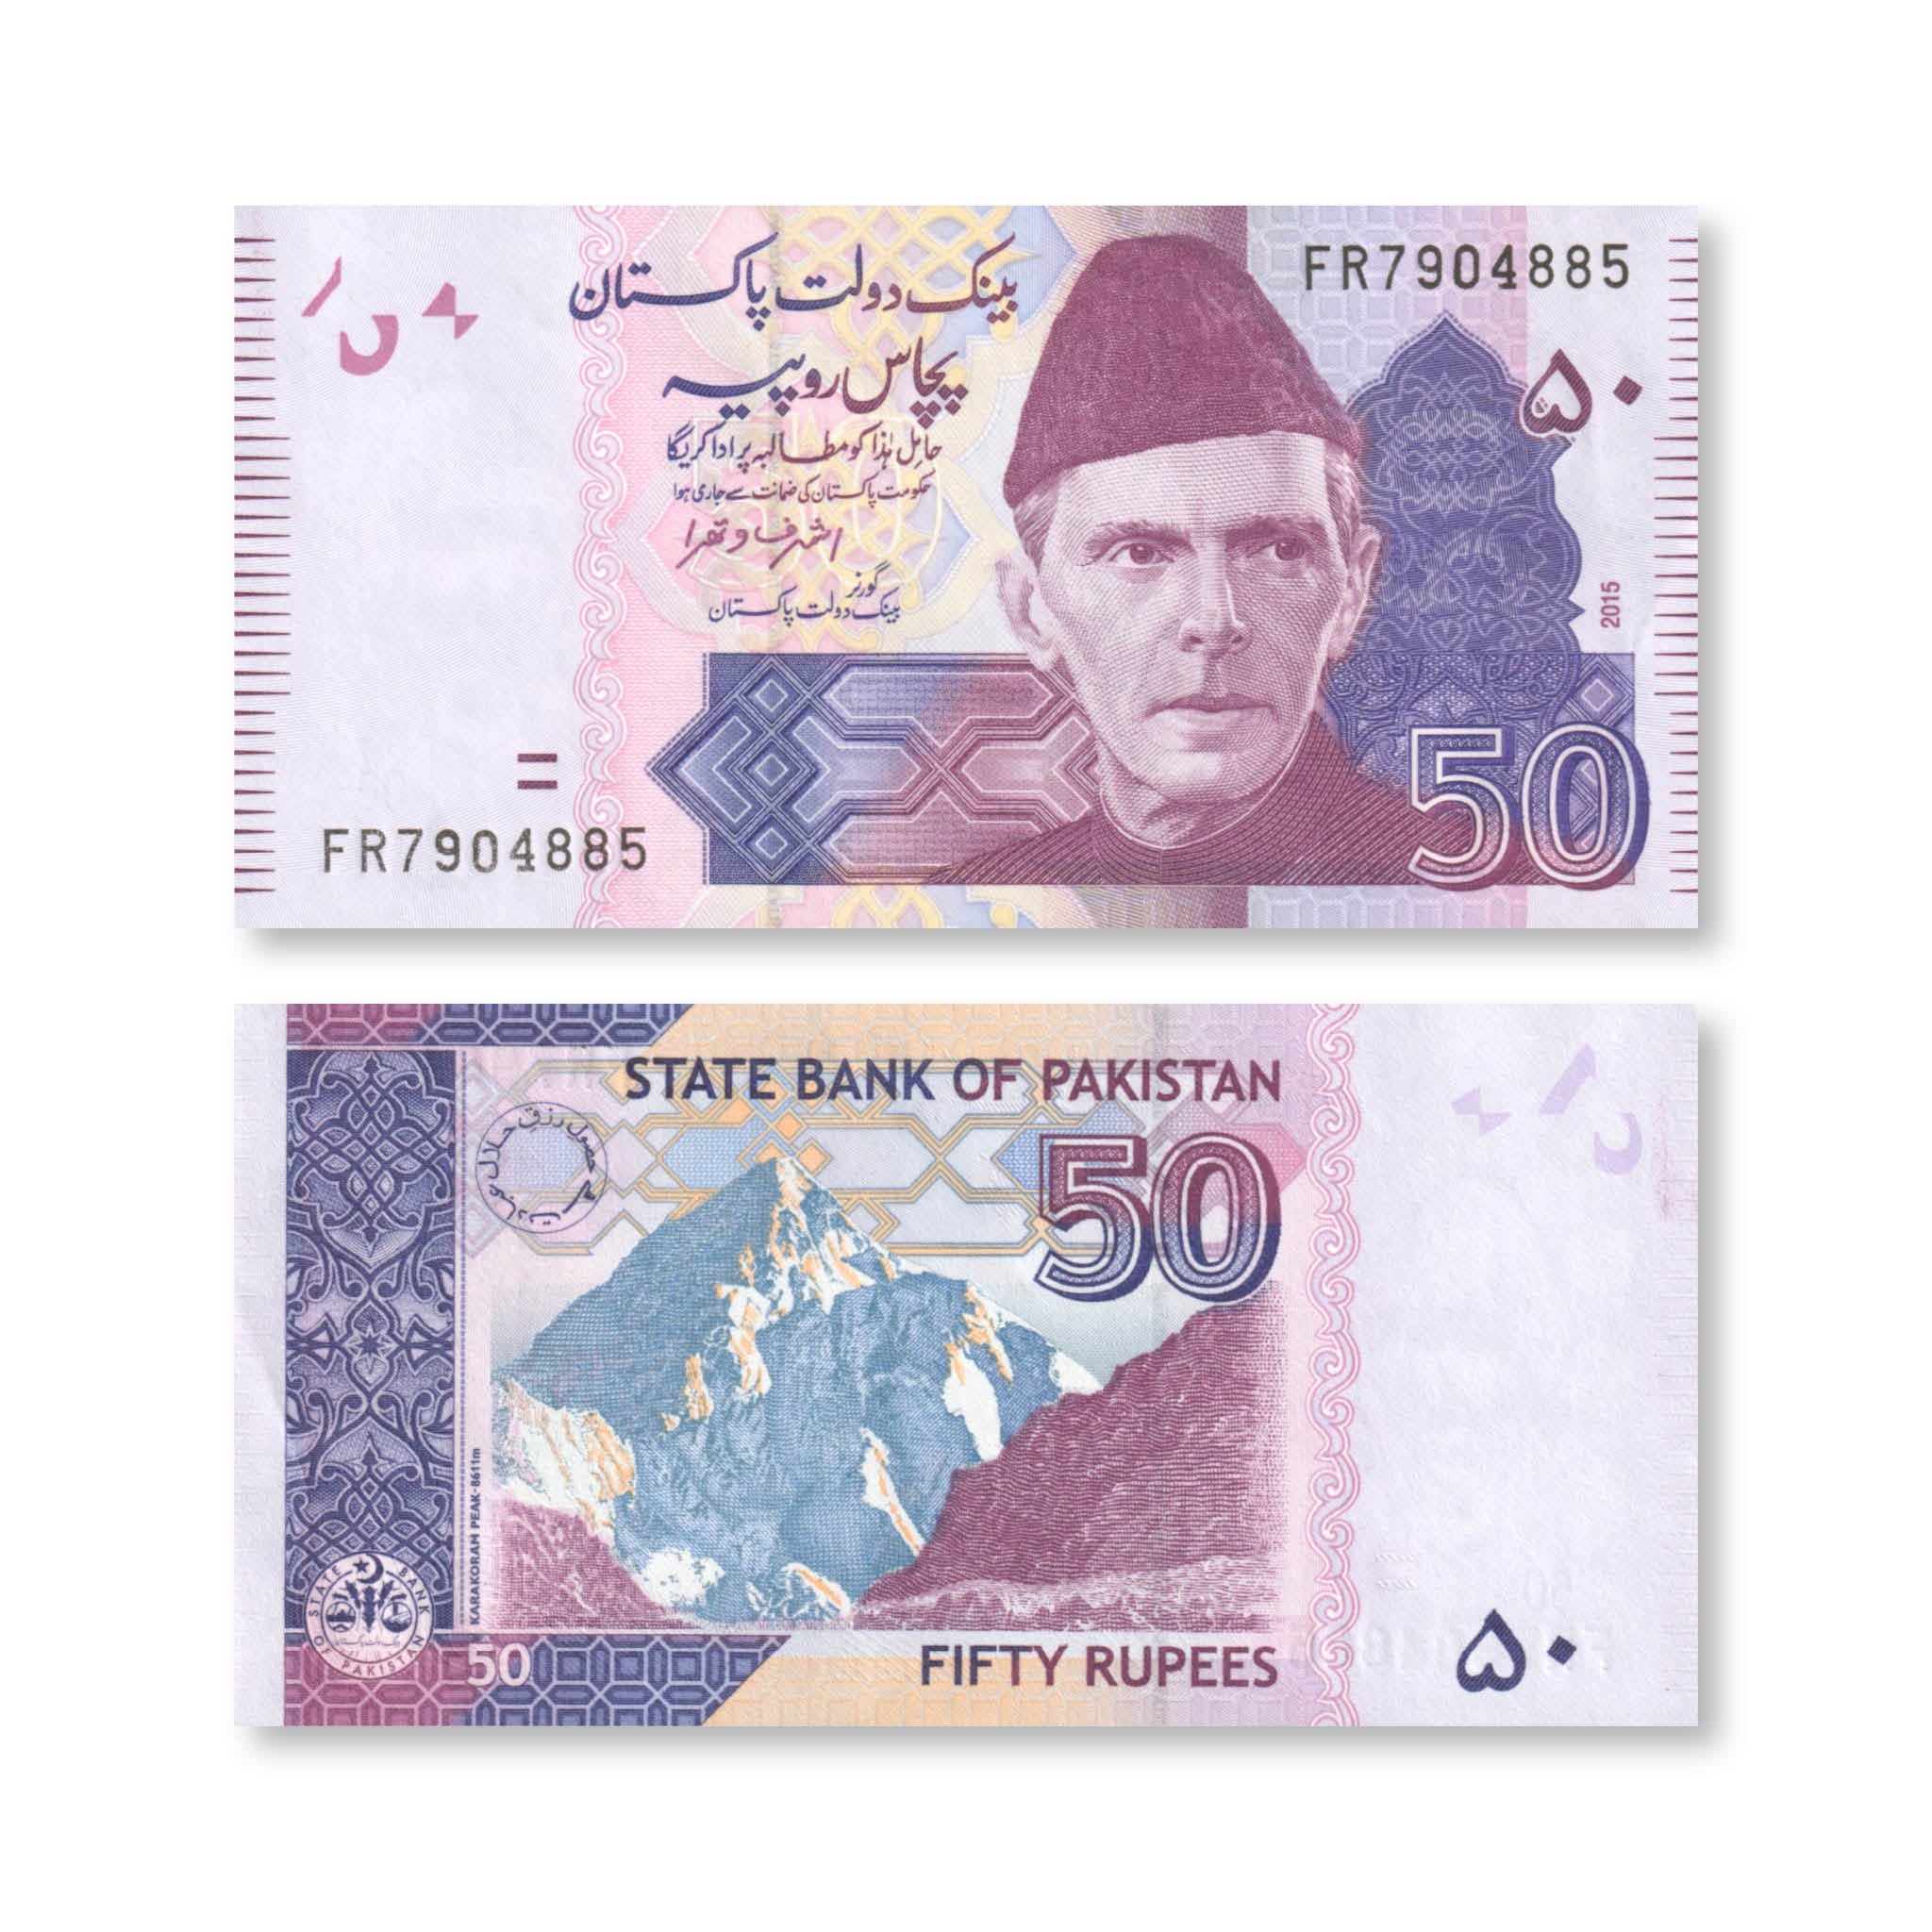 Pakistan 50 Rupees, 2015, B234k, P47i, UNC - Robert's World Money - World Banknotes